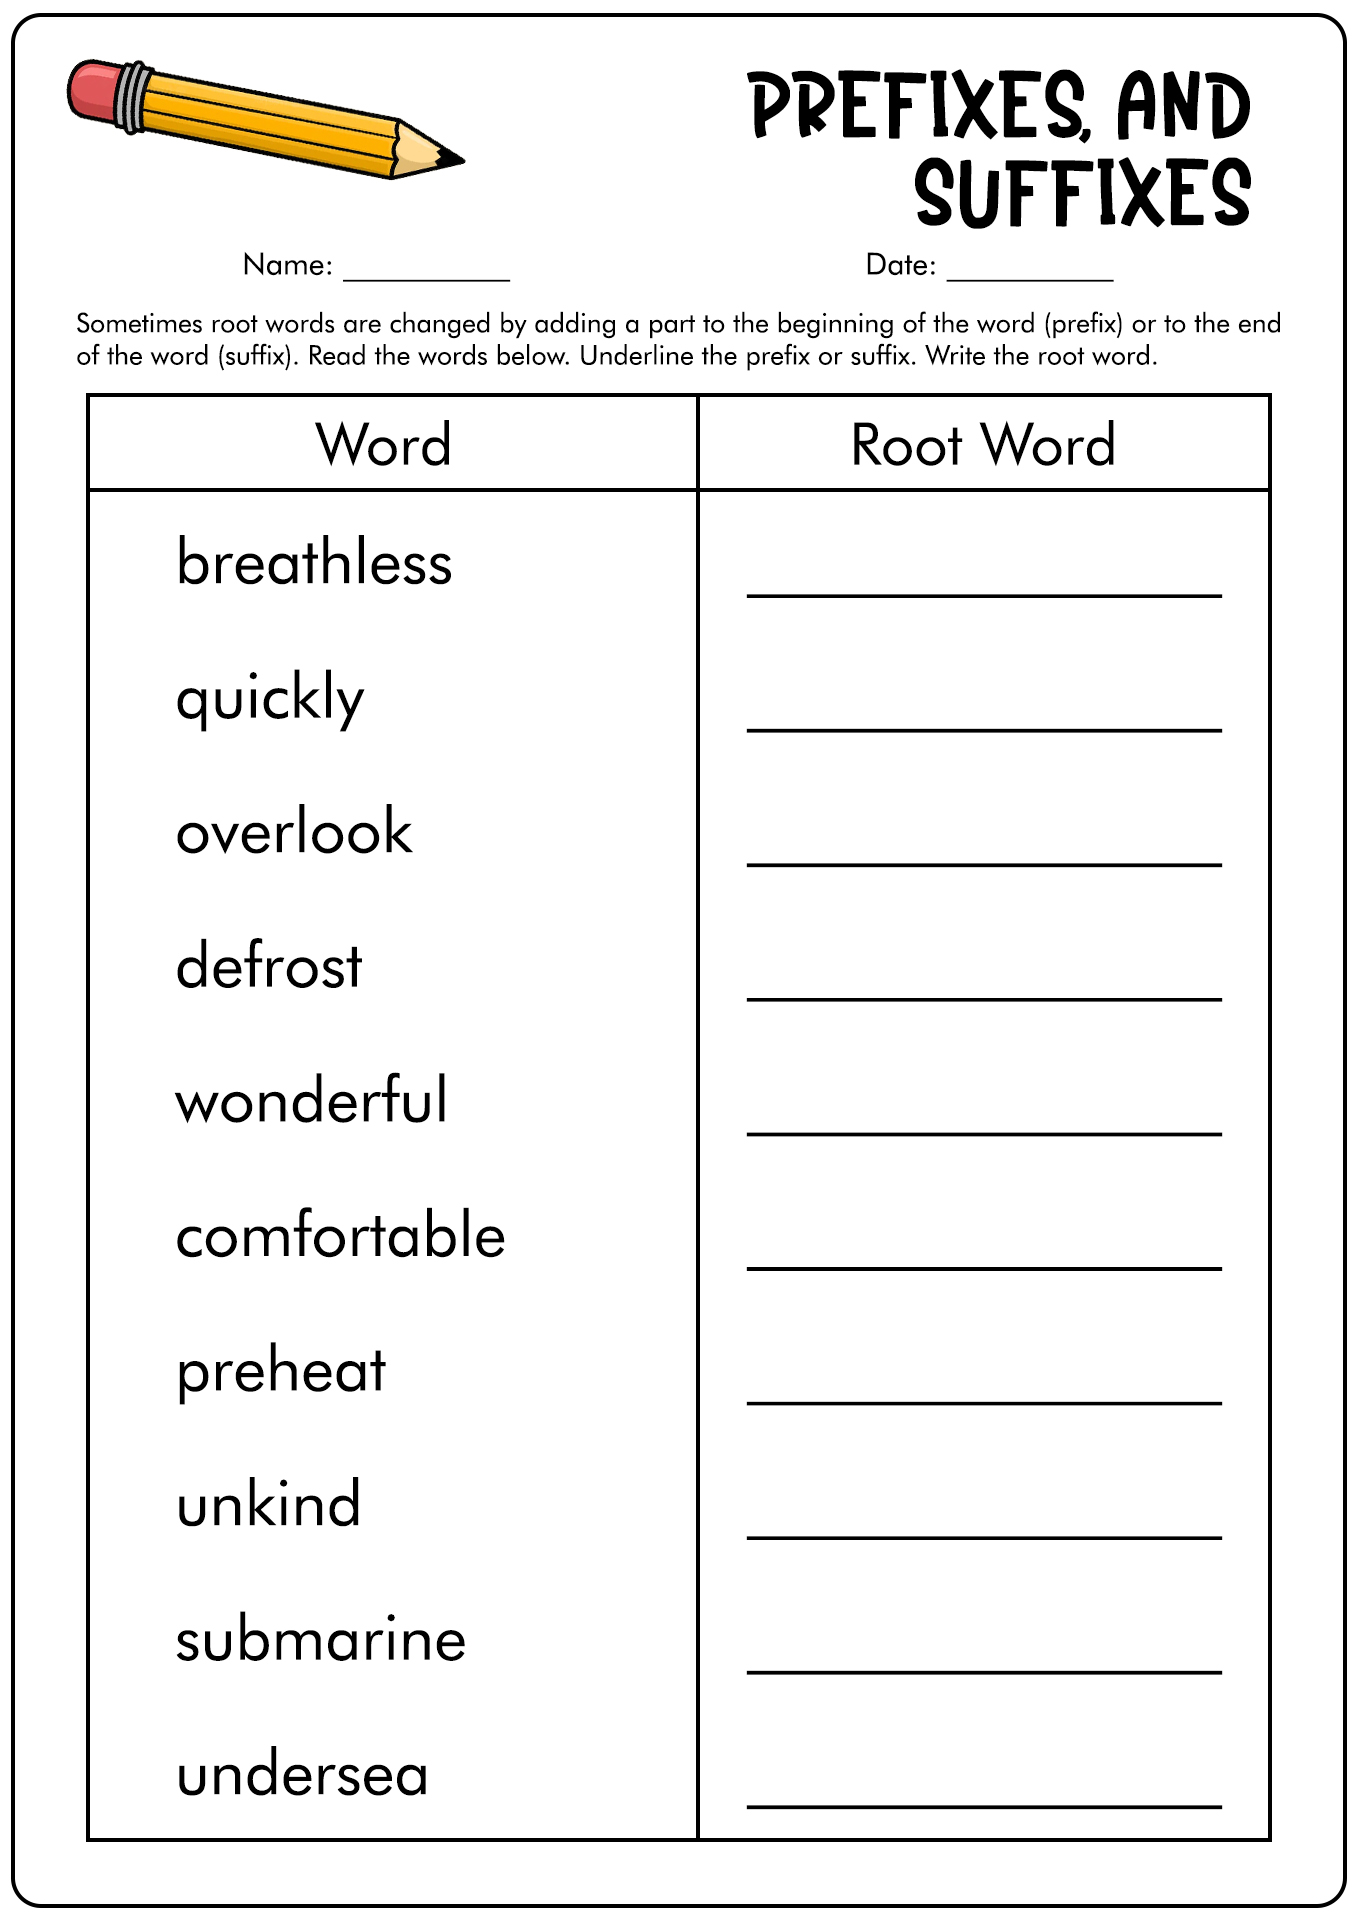 prefix-suffix-worksheet-4th-grade